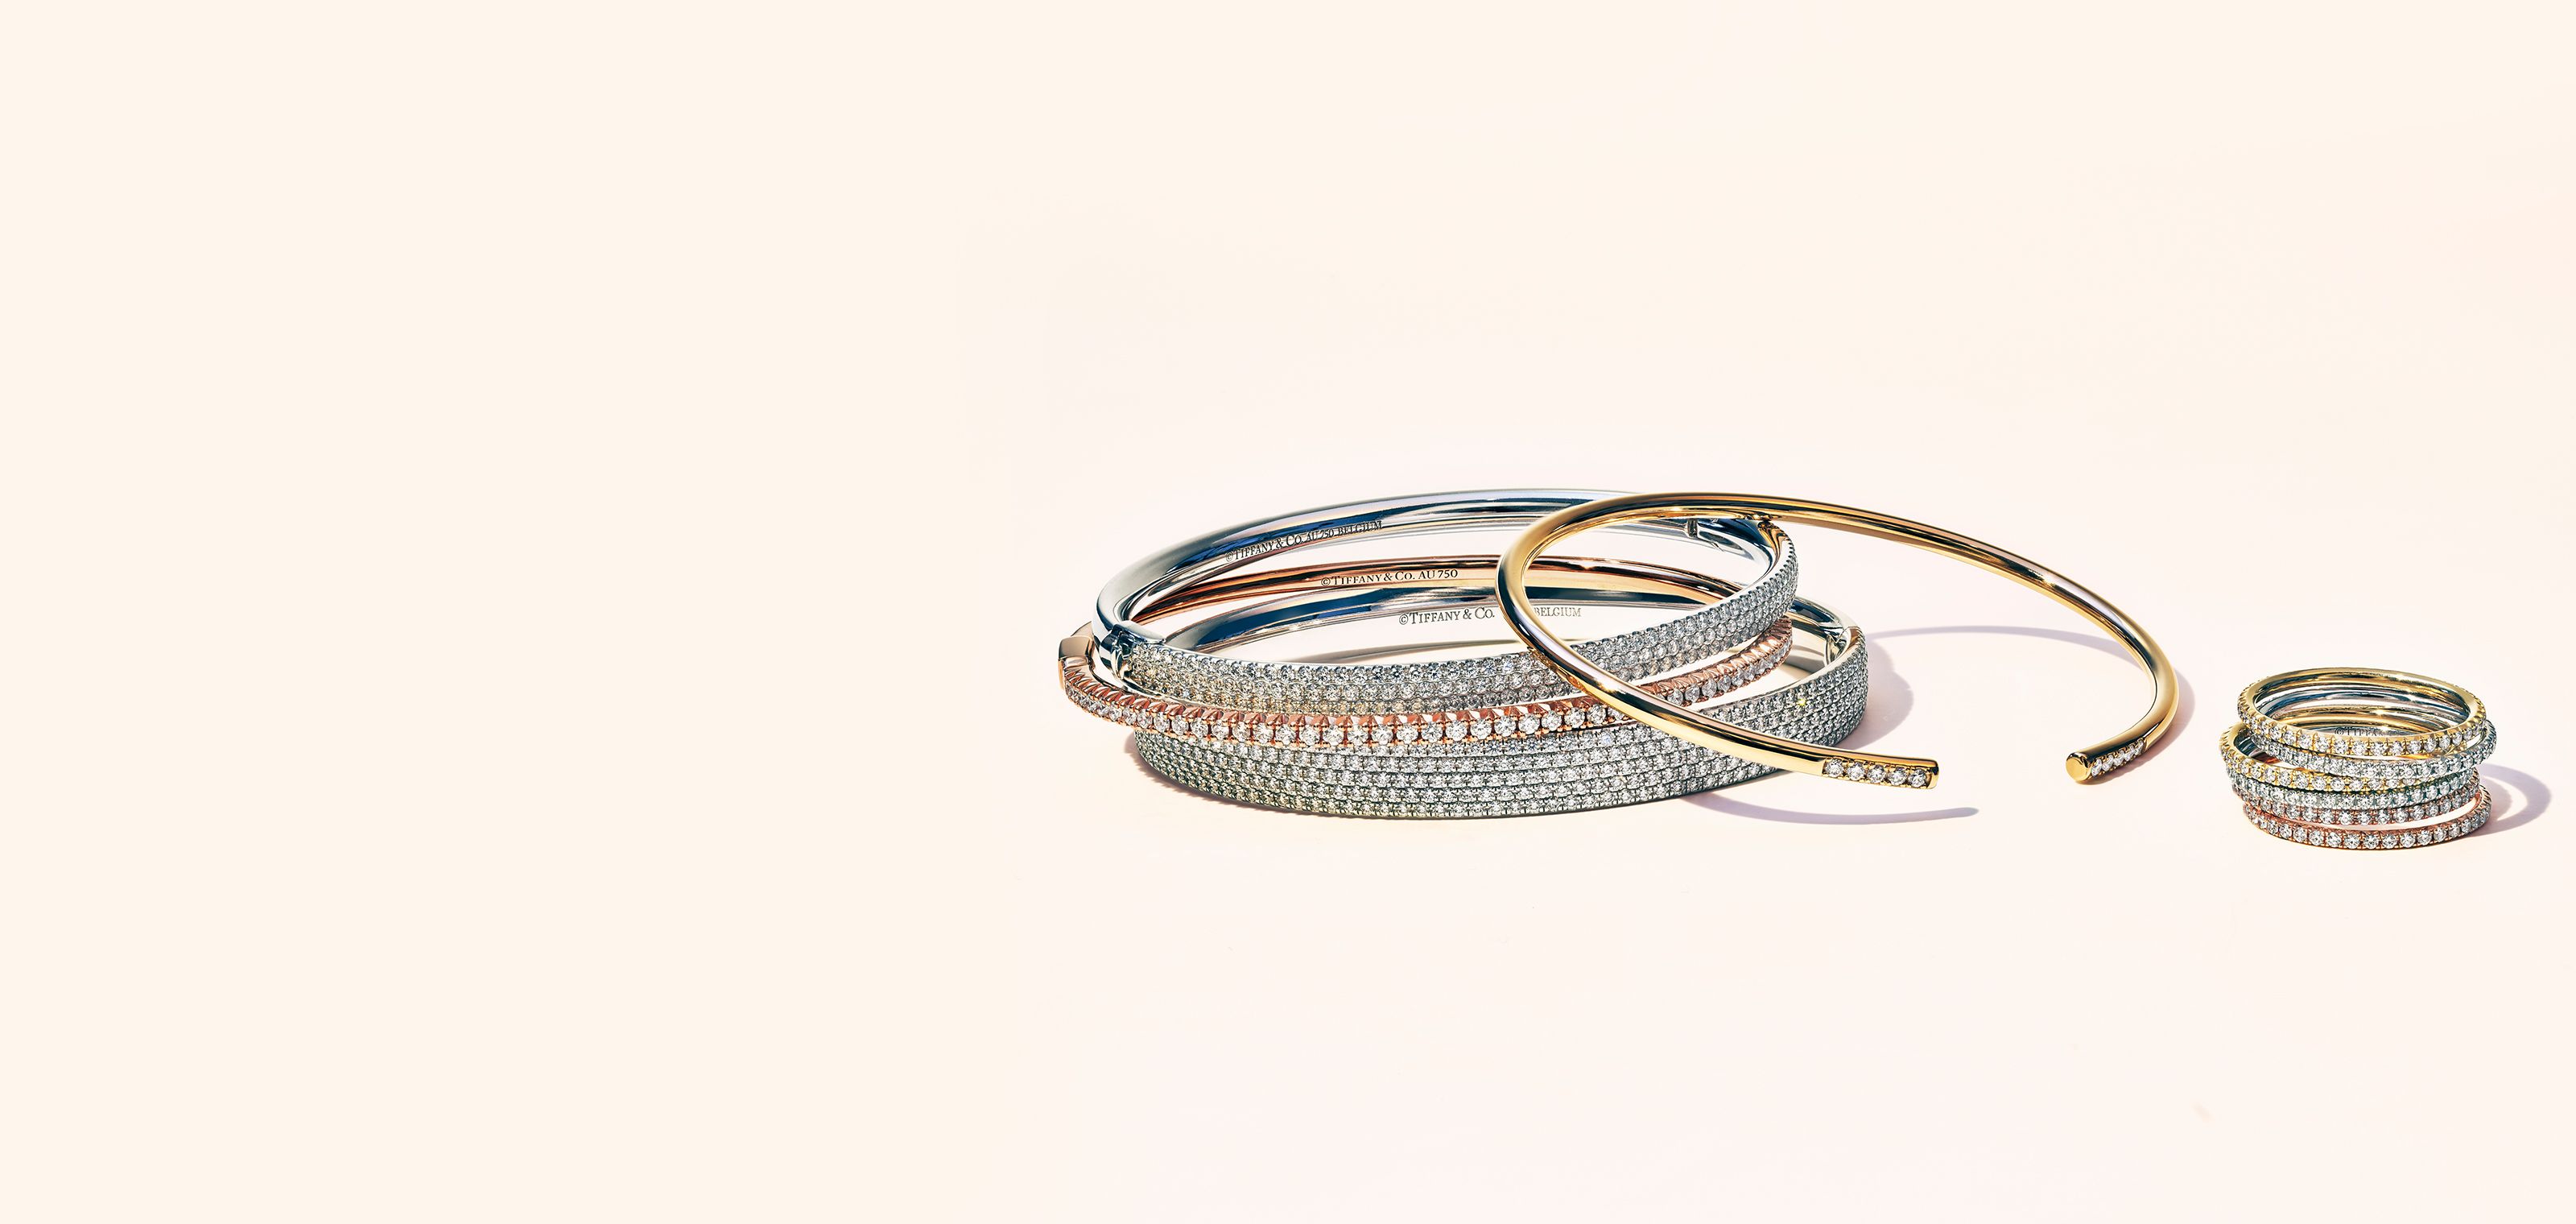 Tiffany Metro Hinged Bangle Bracelet in 18K Rose Gold with Diamonds, Medium